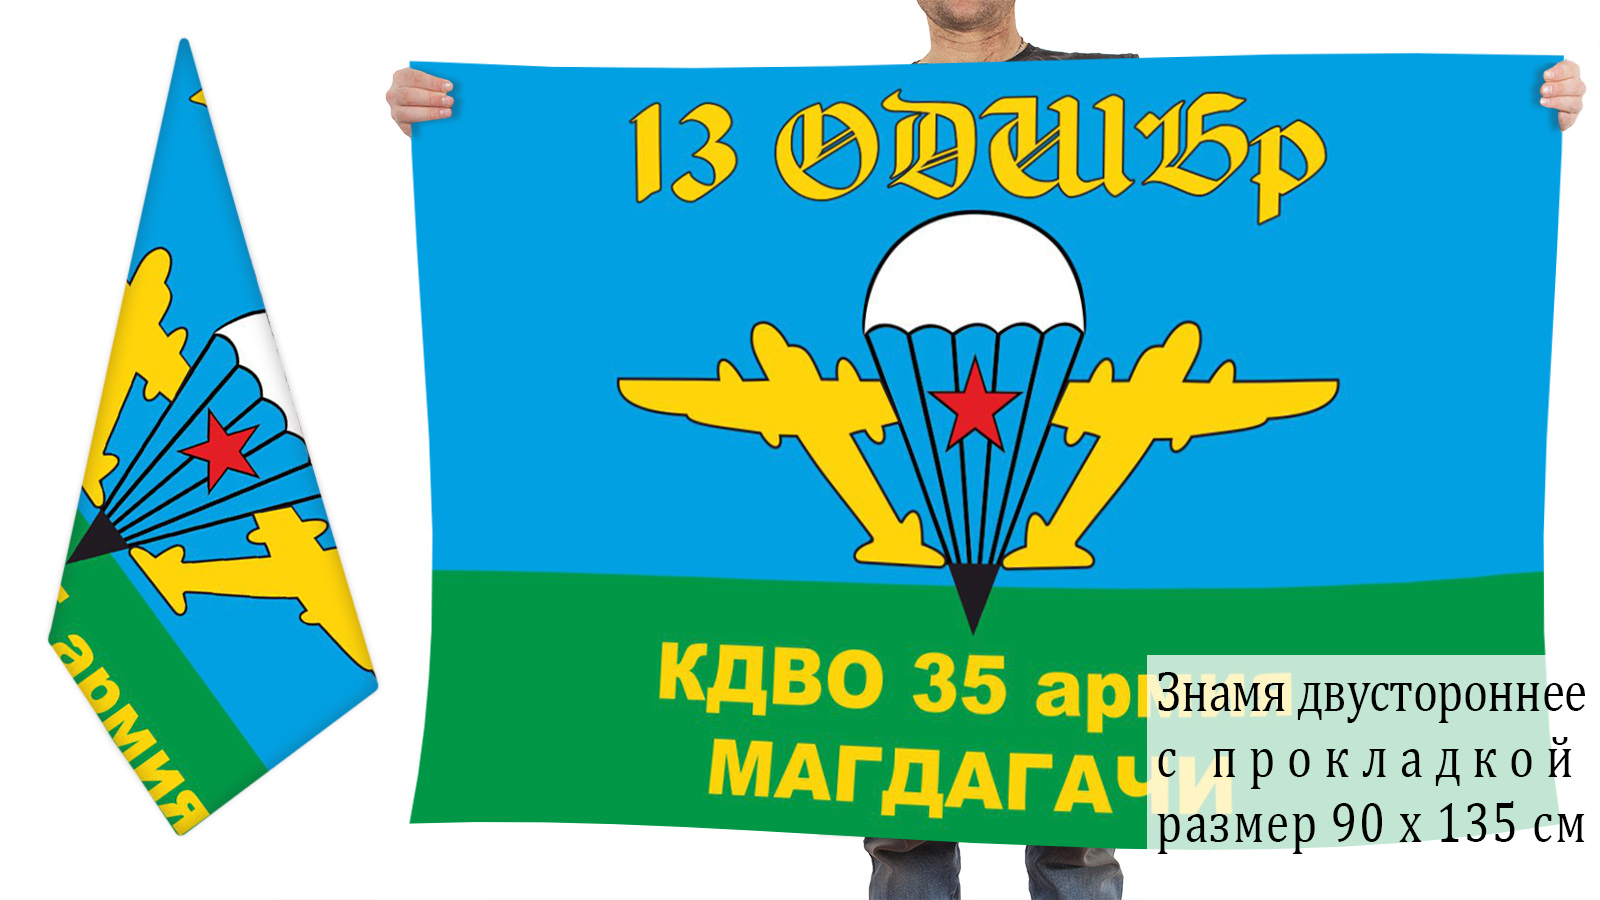 Двусторонний флаг 13 ОДШБр 35 общевойсковой армии